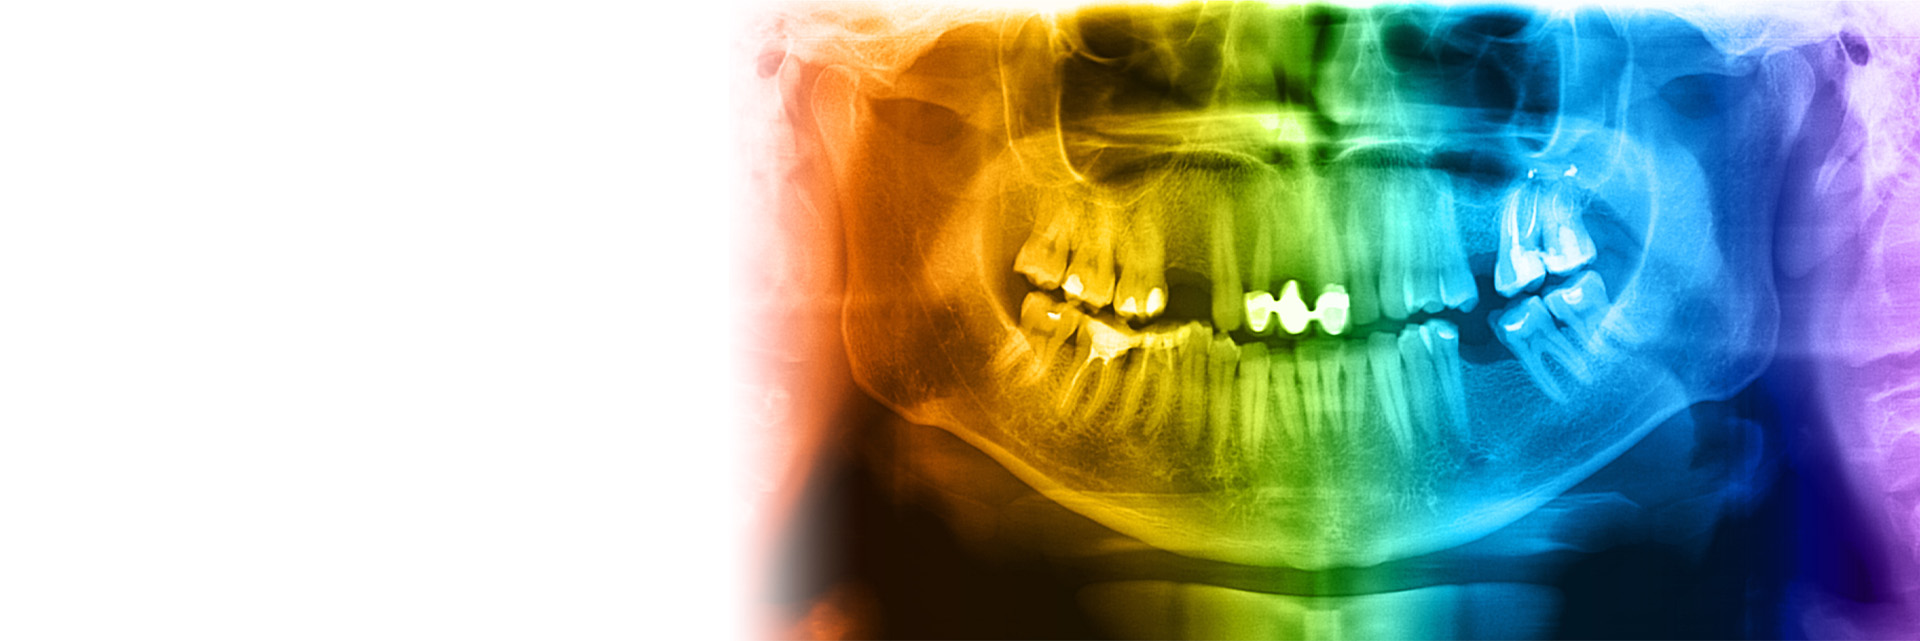 Dental imaging